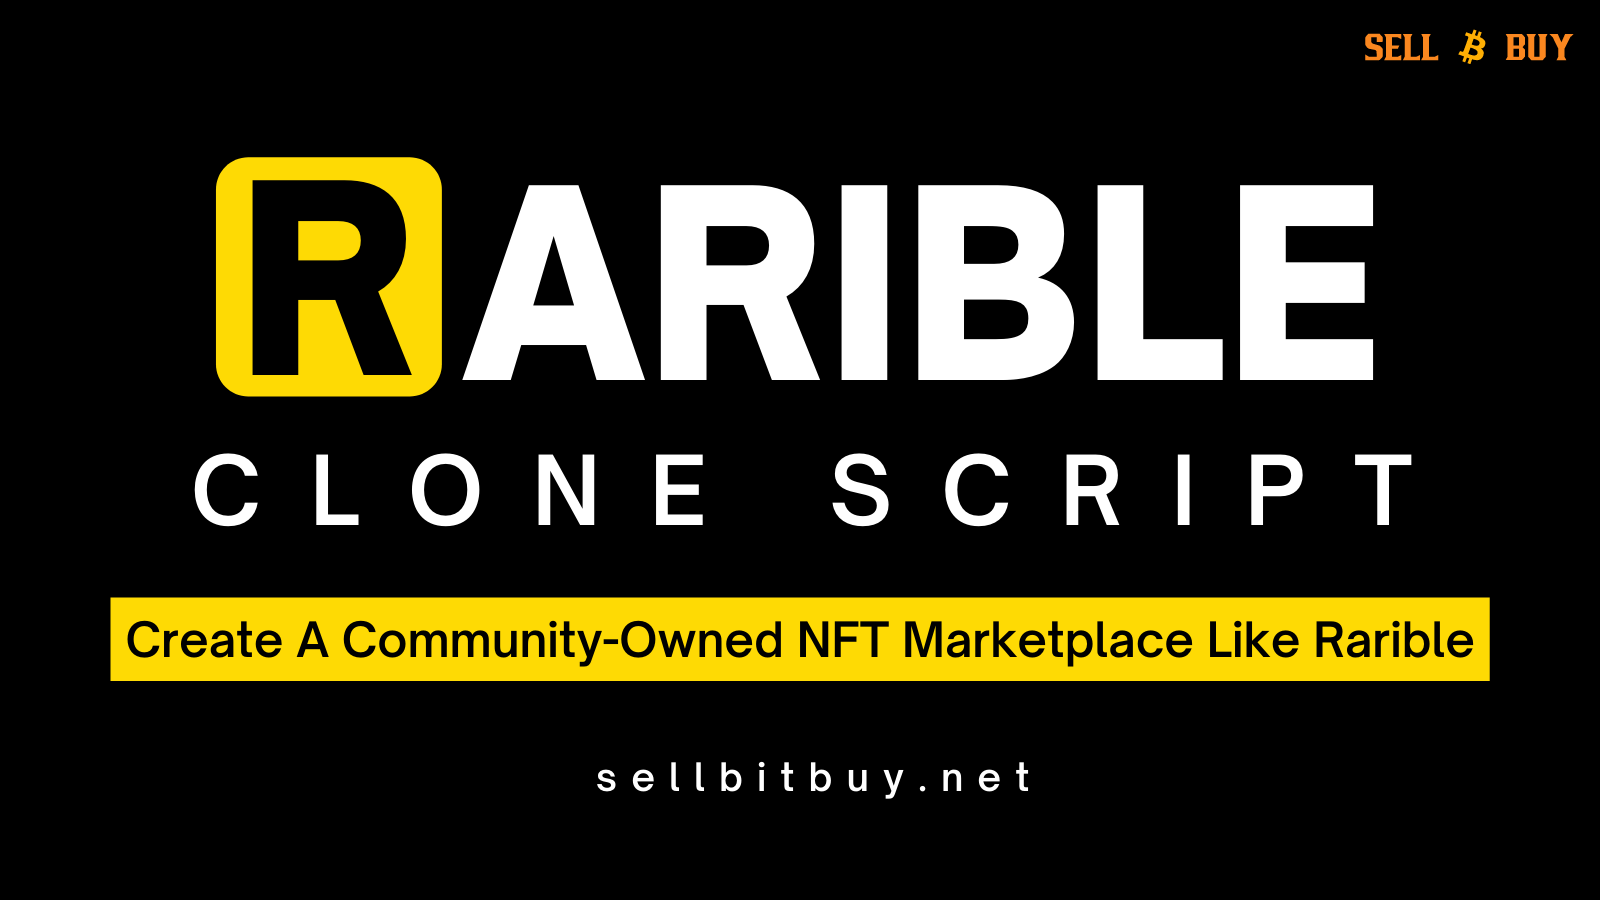 Rarible Clone Script - Create A NFT Marketplace Like Rarible